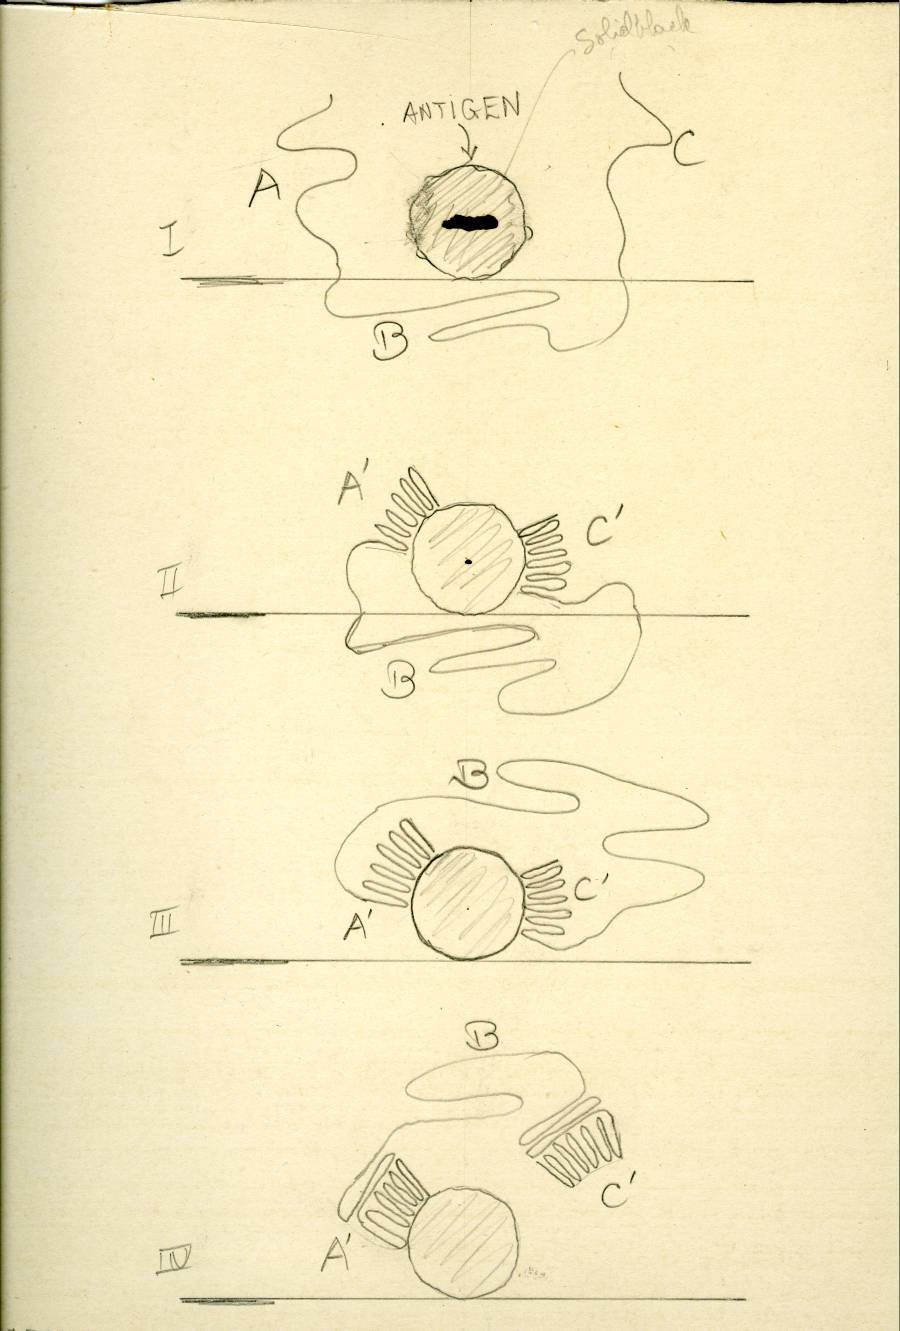 Drawings of antigens and antibodies by Linus Pauling.